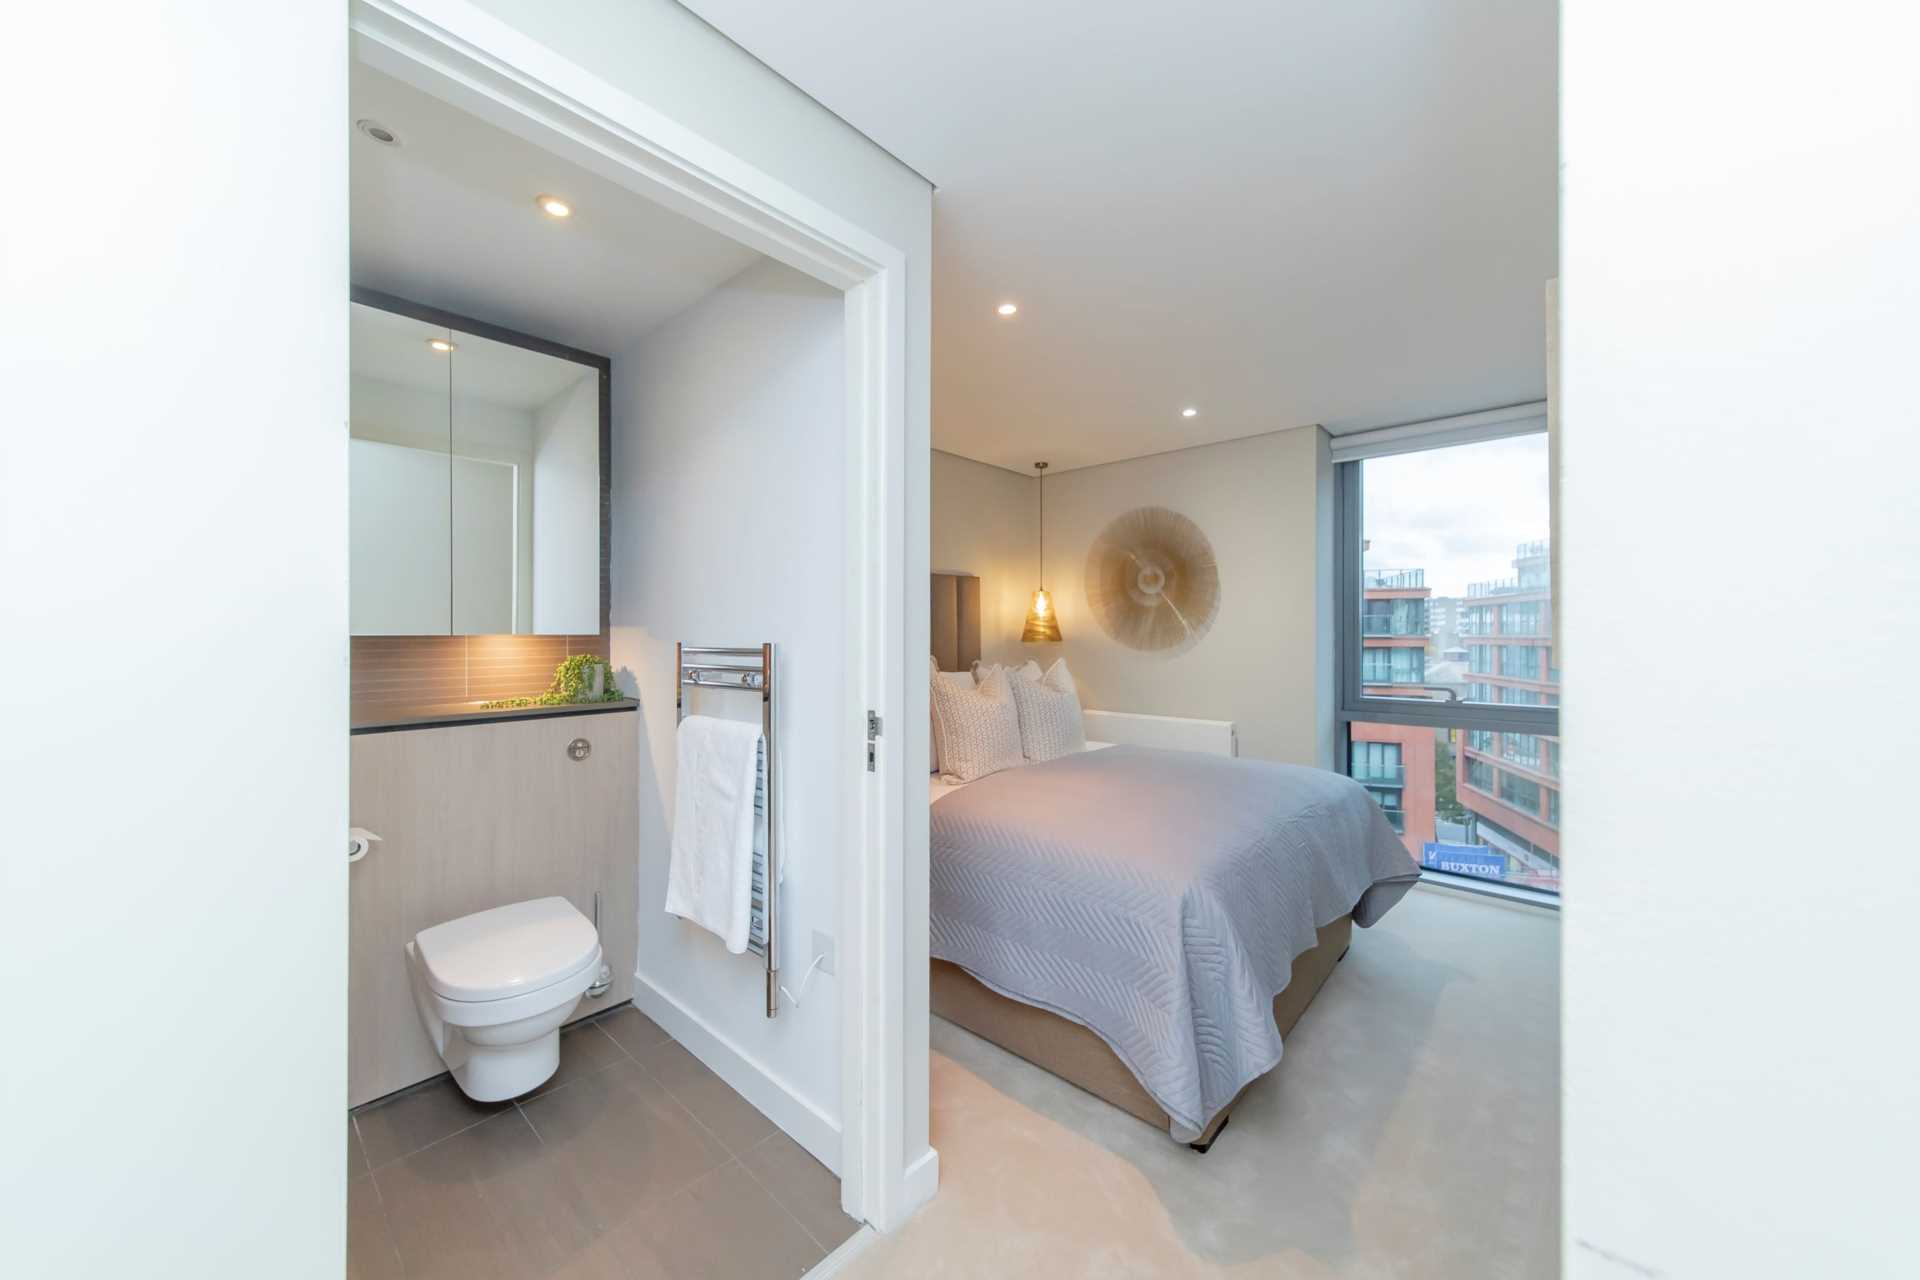 London W2 1AN 3 bed flat rental property internal/external image-4